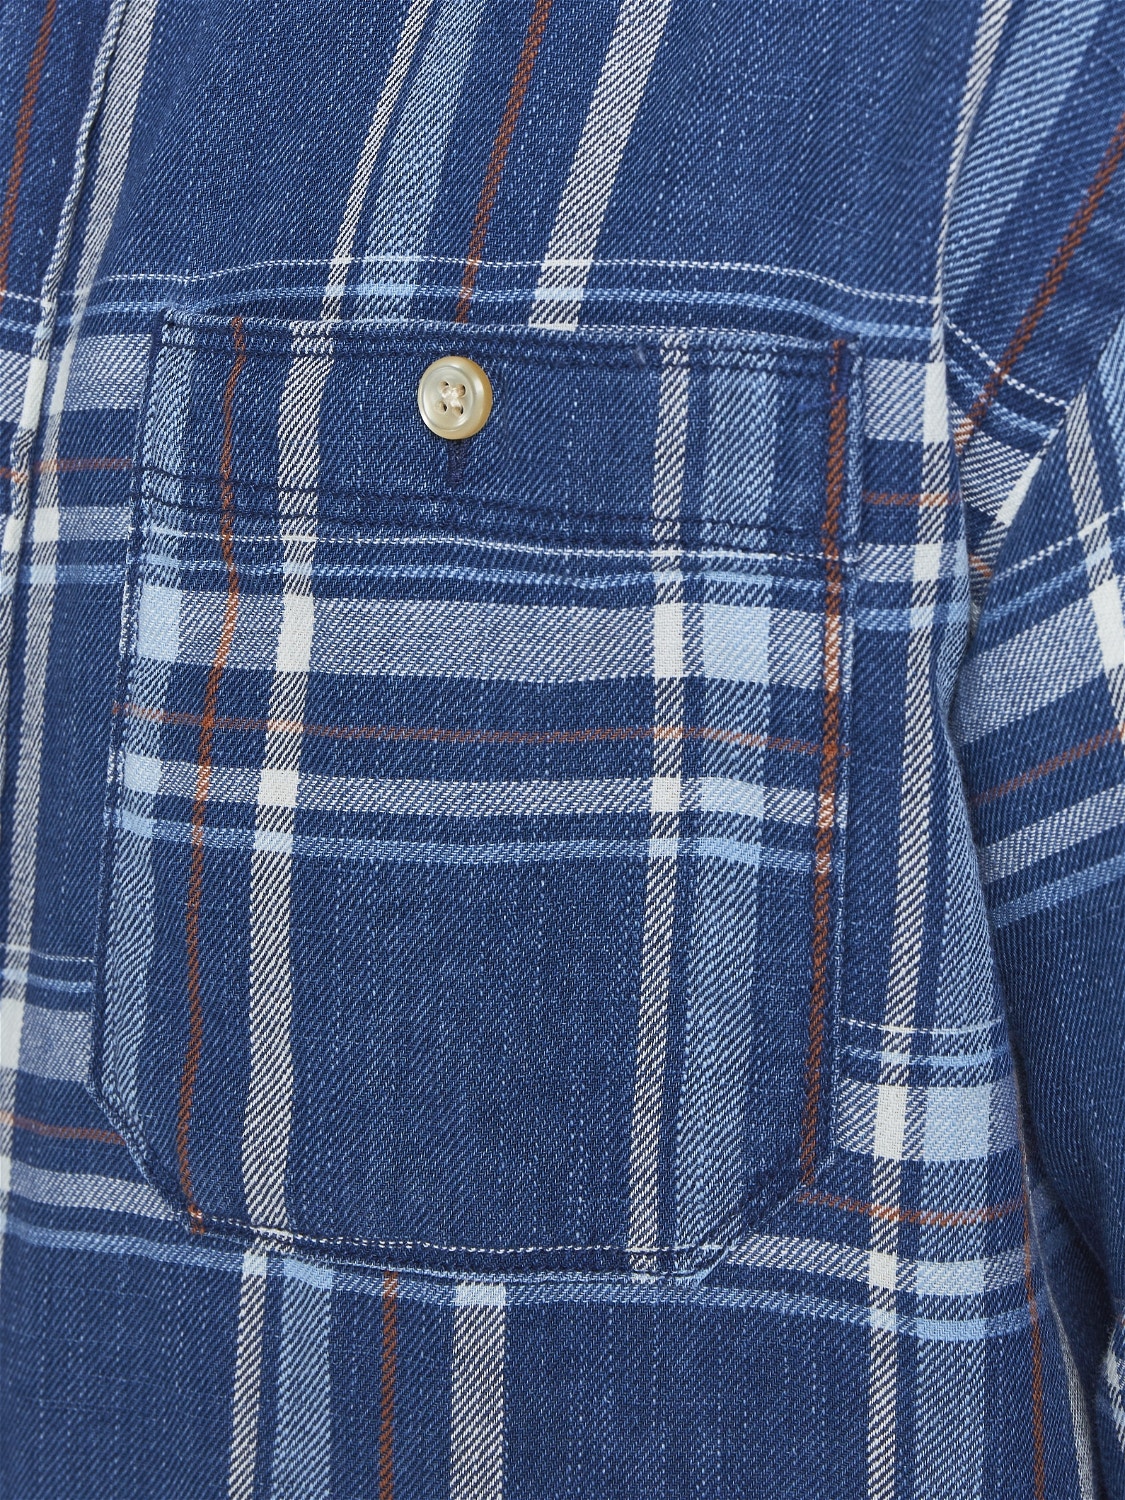 Jack & Jones Comfort Fit Checked shirt -Medium Blue Denim - 12203832